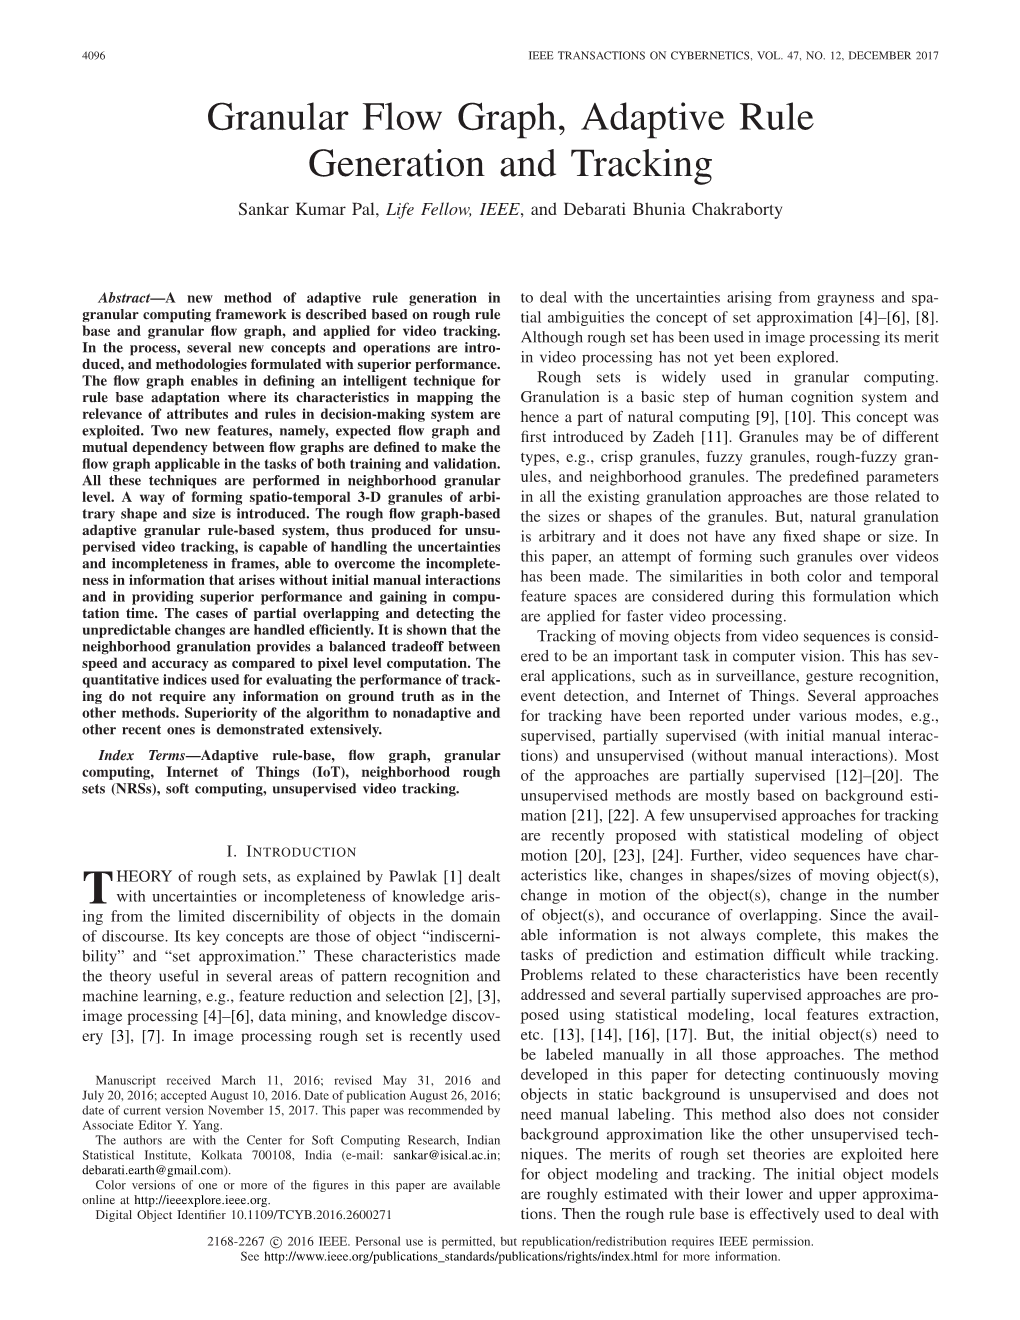 Granular Flow Graph, Adaptive Rule Generation and Tracking Sankar Kumar Pal, Life Fellow, IEEE, and Debarati Bhunia Chakraborty